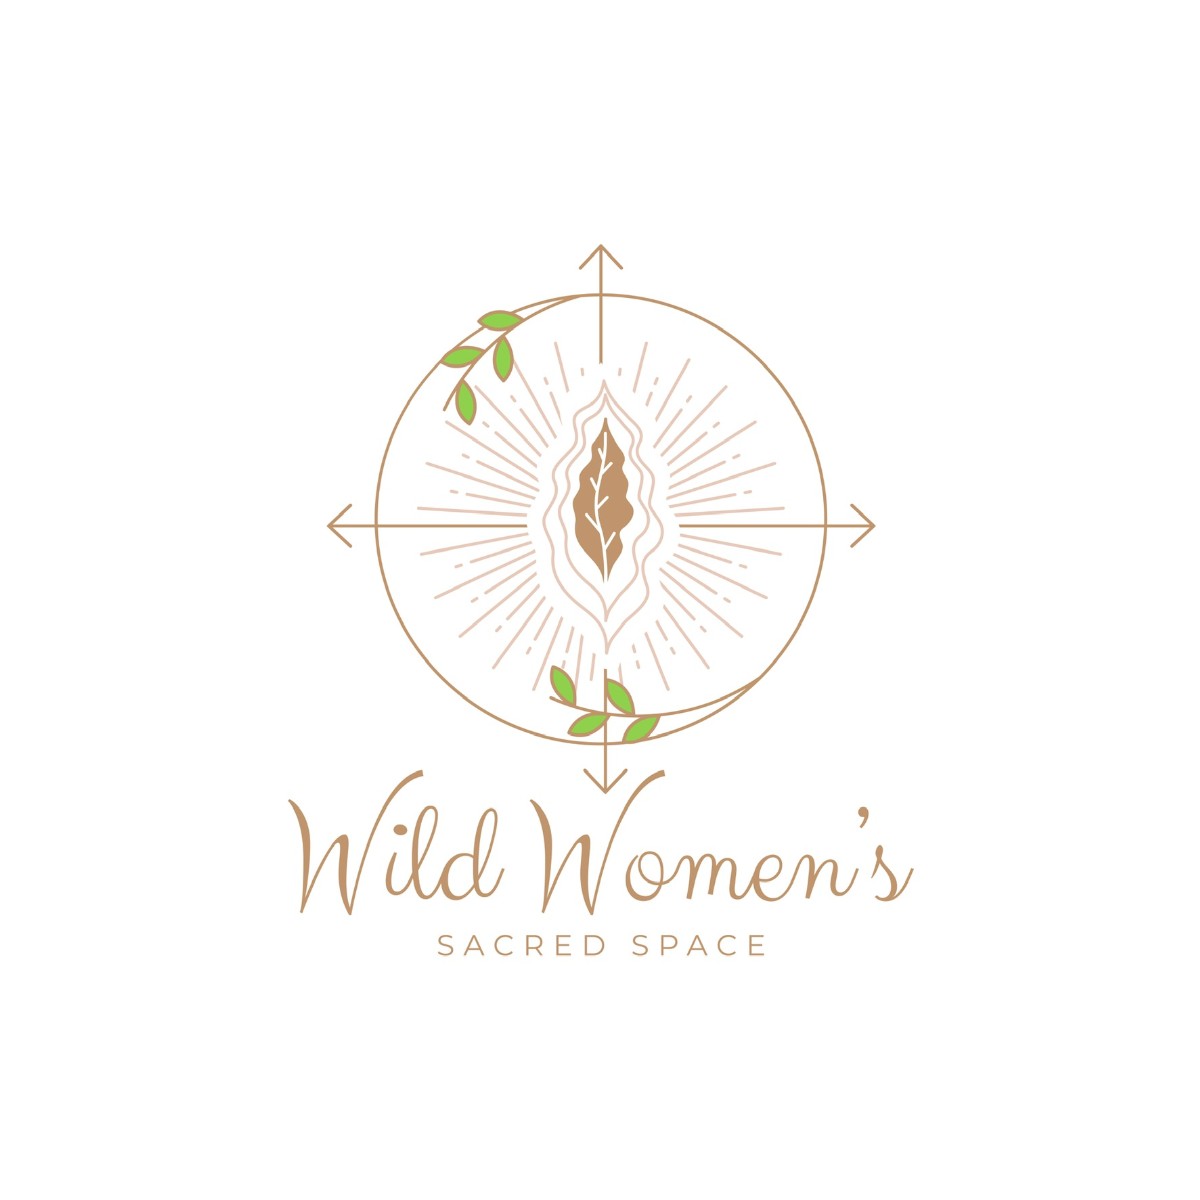 Wild Women’s Sacred Space logo